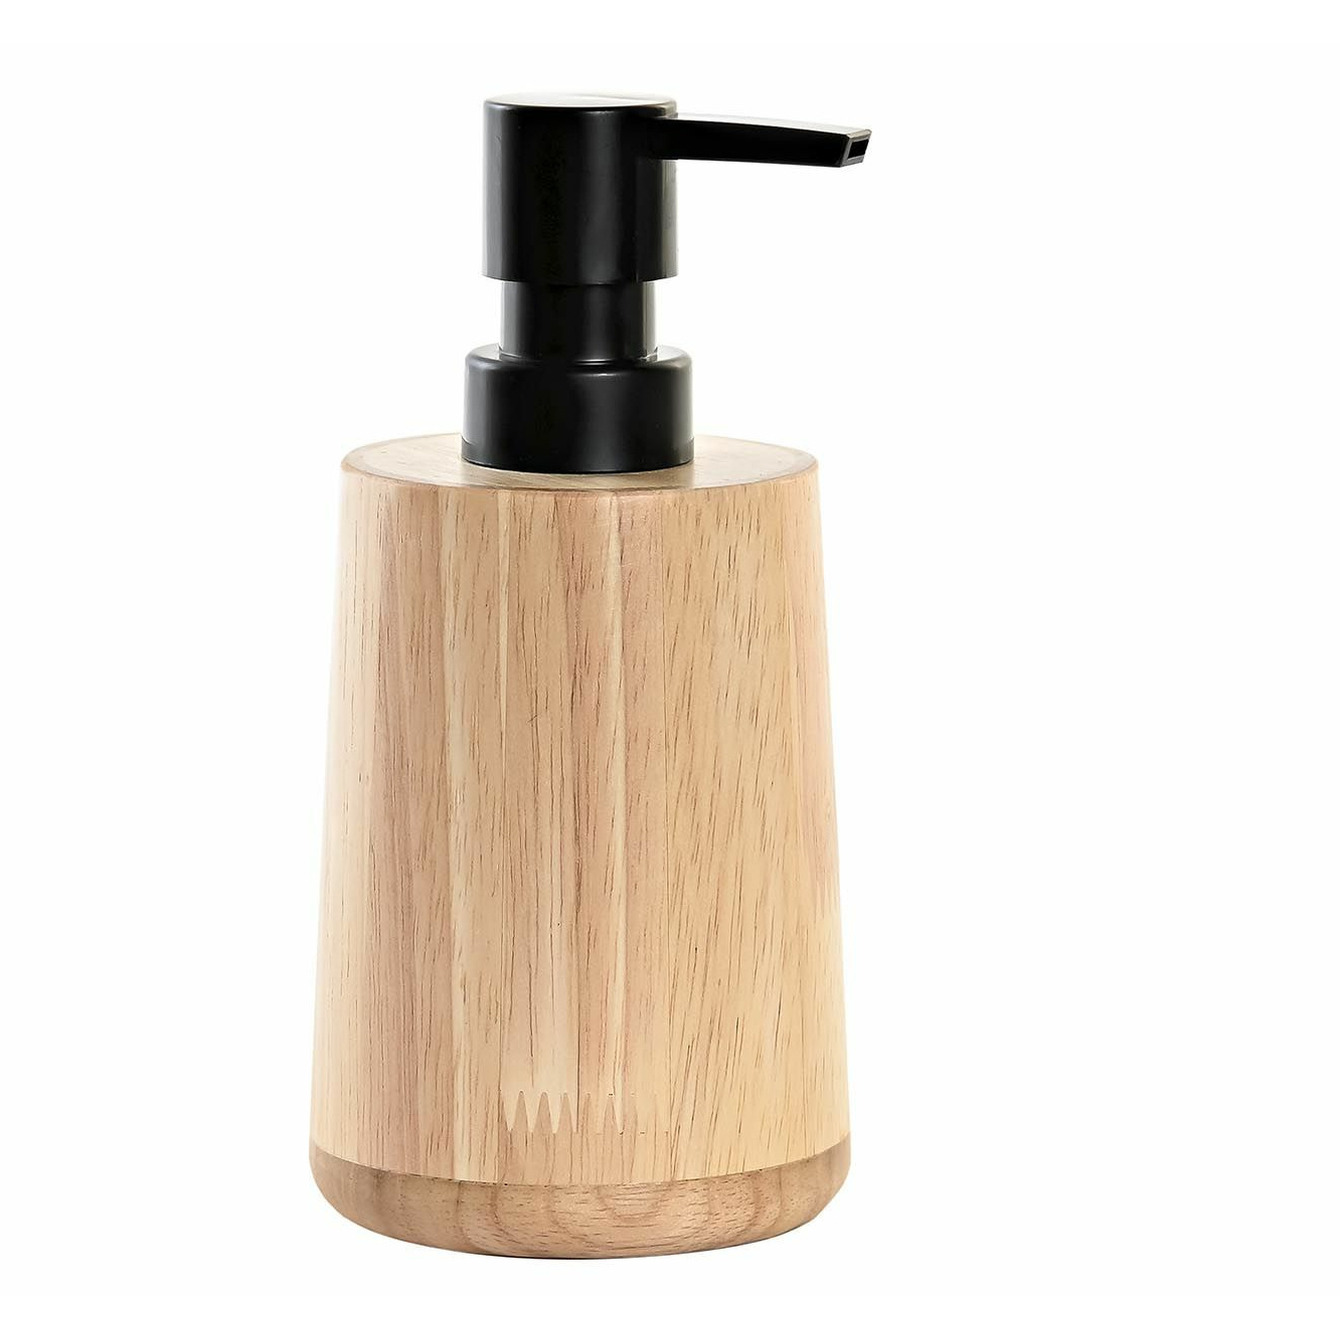 Zeeppompje-dispenser bruin bamboe hout 8 x 16 cm